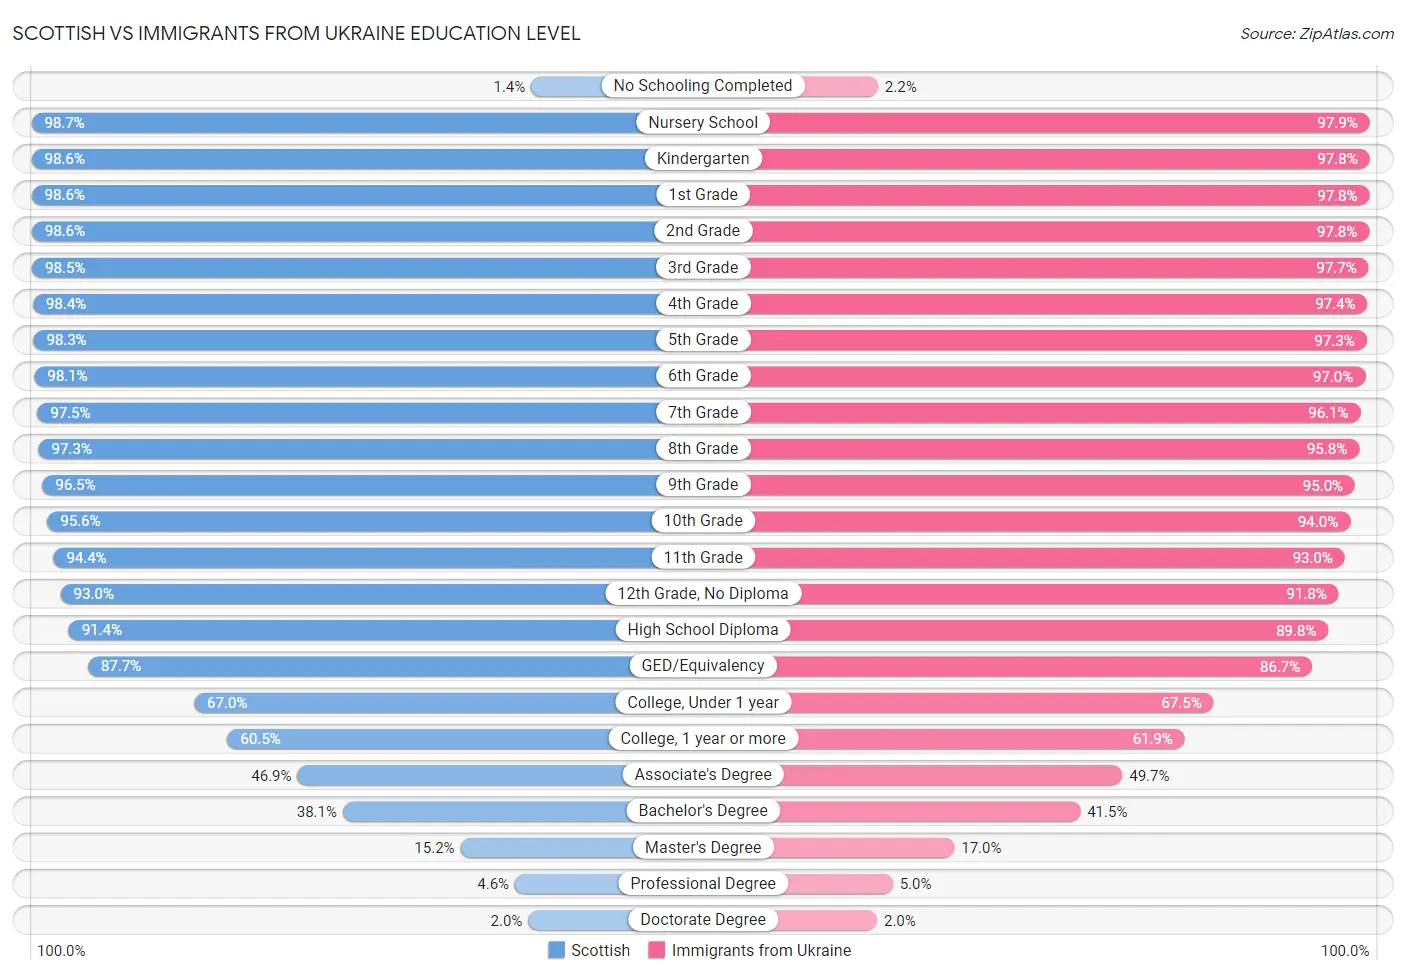 Scottish vs Immigrants from Ukraine Education Level